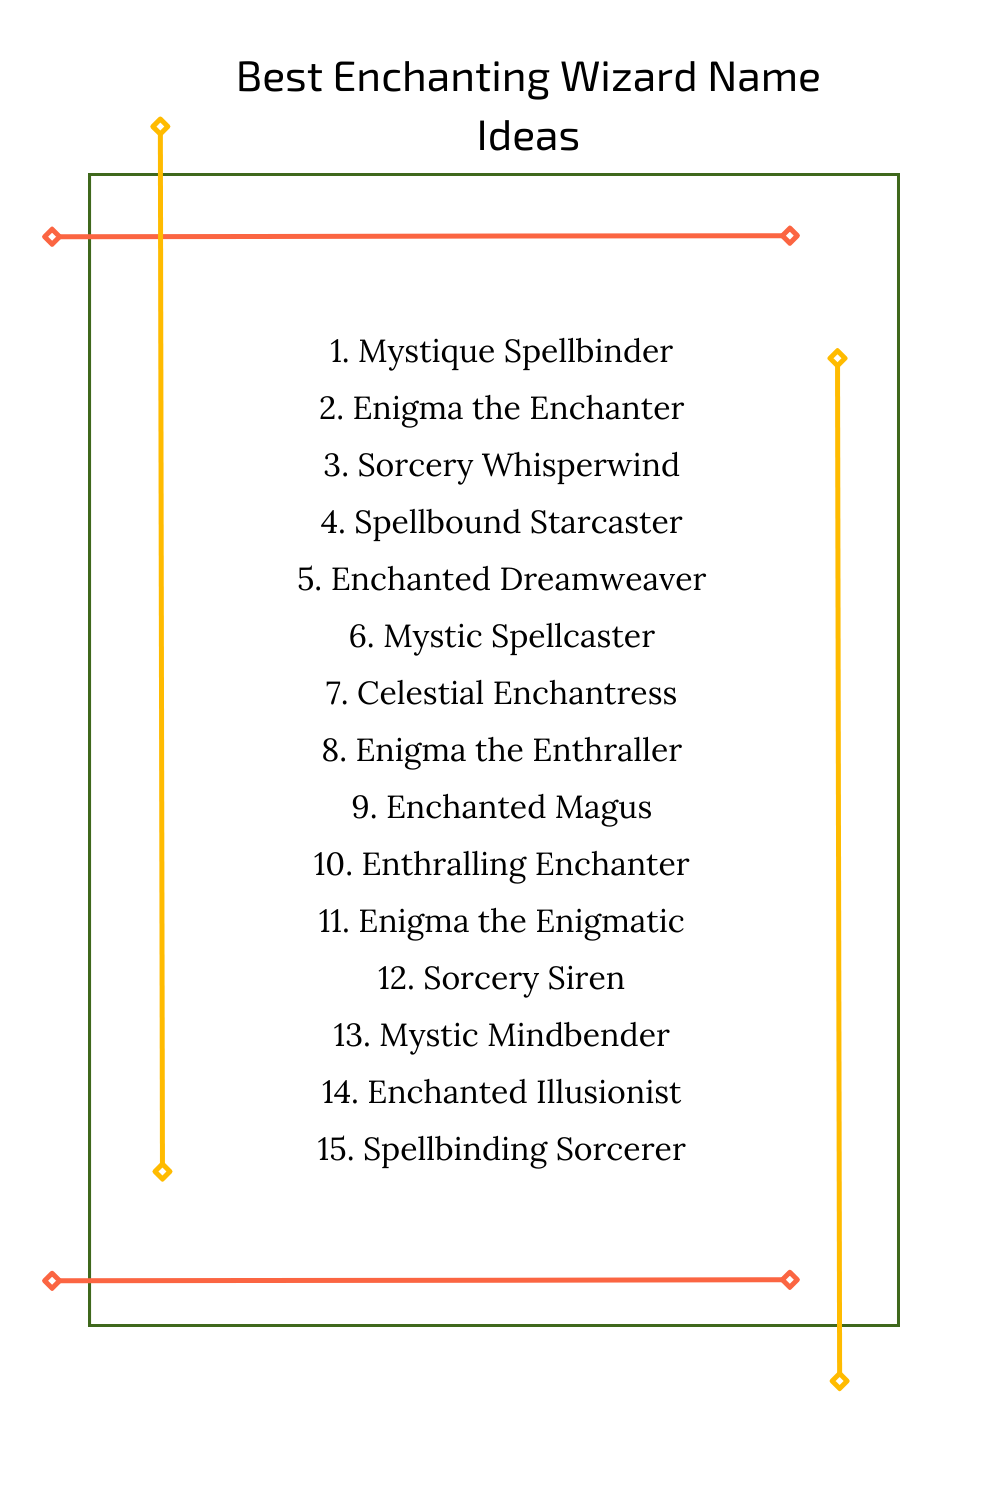 Best Enchanting Wizard Name Ideas